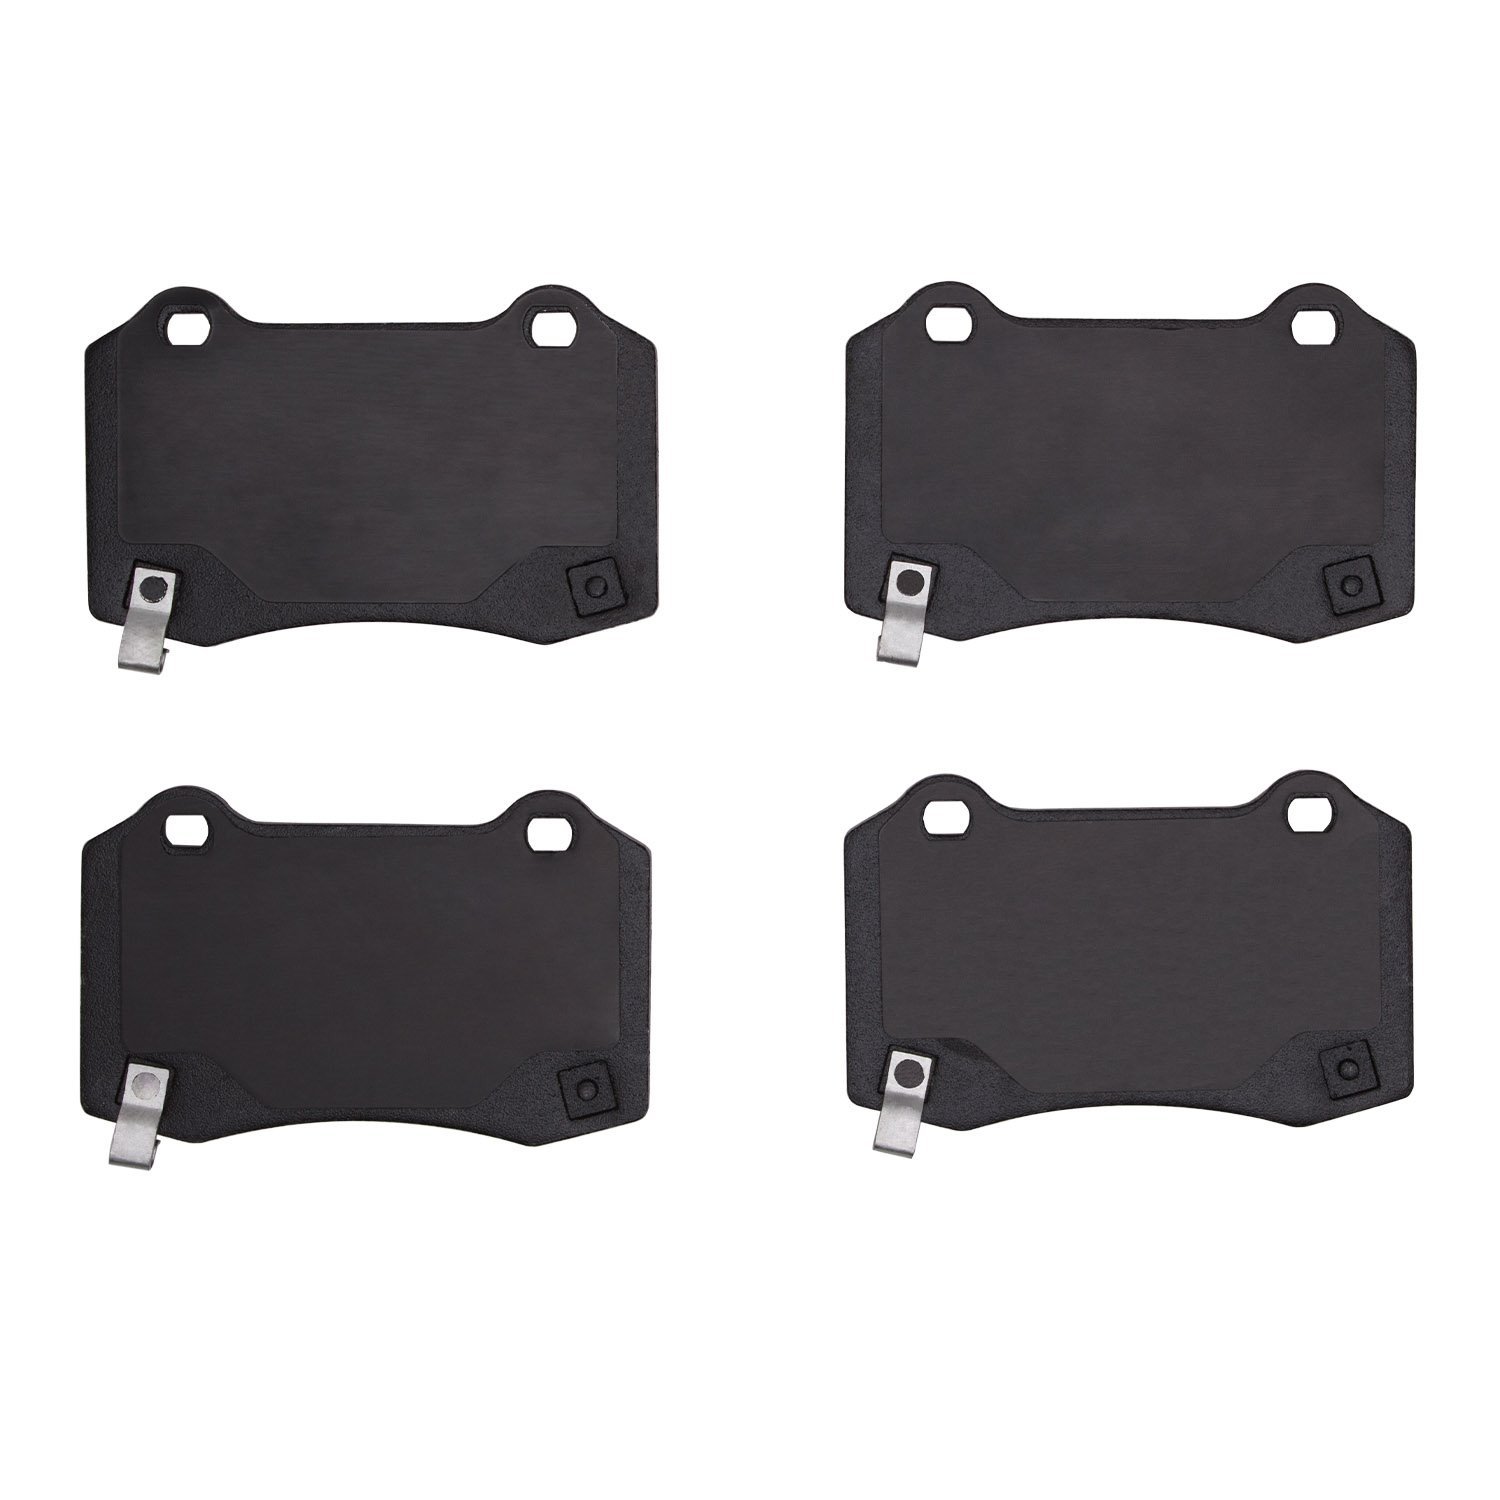 1310-1053-00 3000-Series Ceramic Brake Pads, Fits Select Multiple Makes/Models, Position: Rear